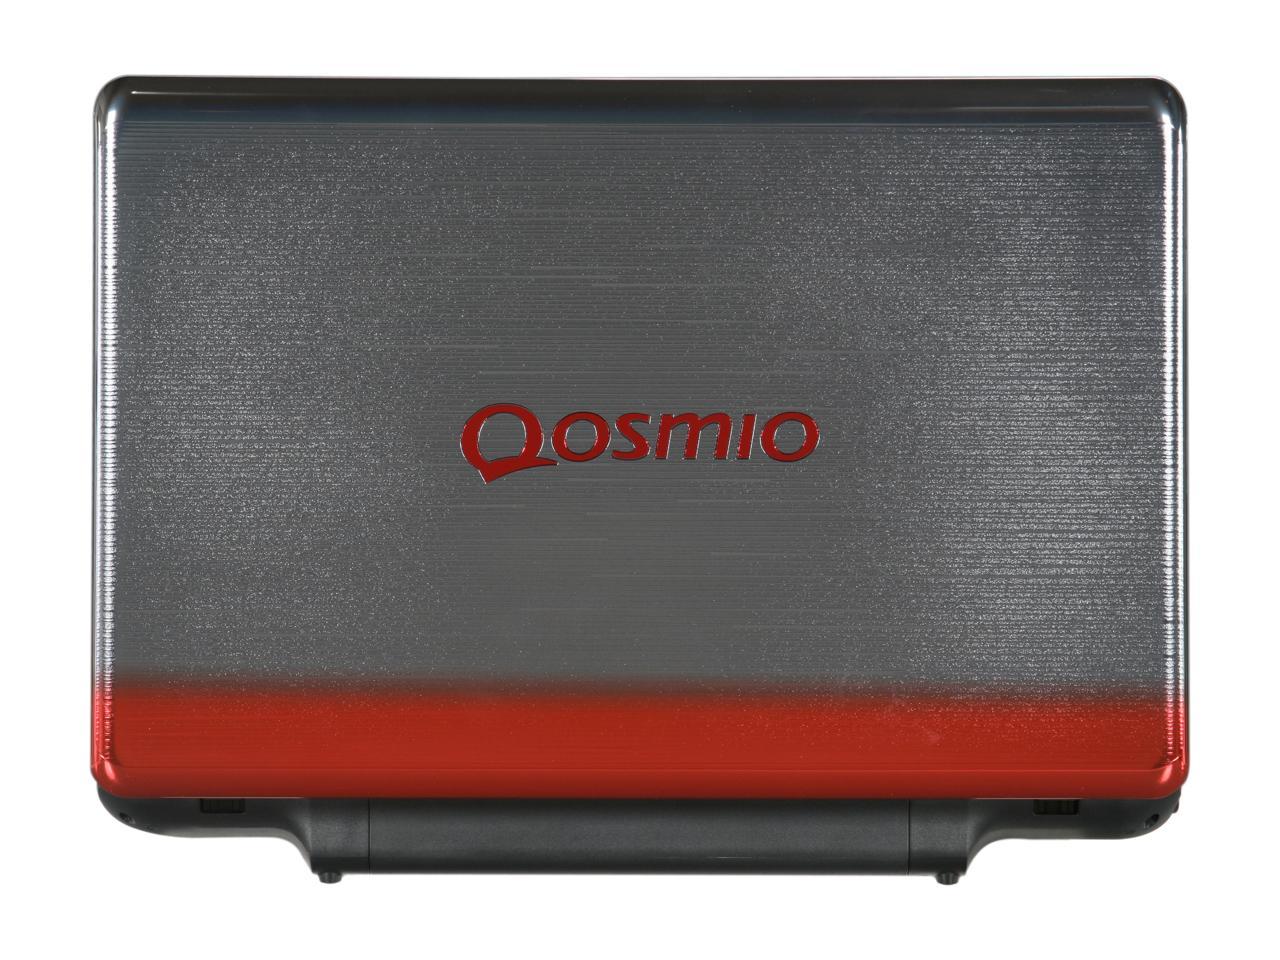 TOSHIBA Laptop Qosmio Intel Core i7 2nd Gen 2670QM (2.20GHz) 8GB 